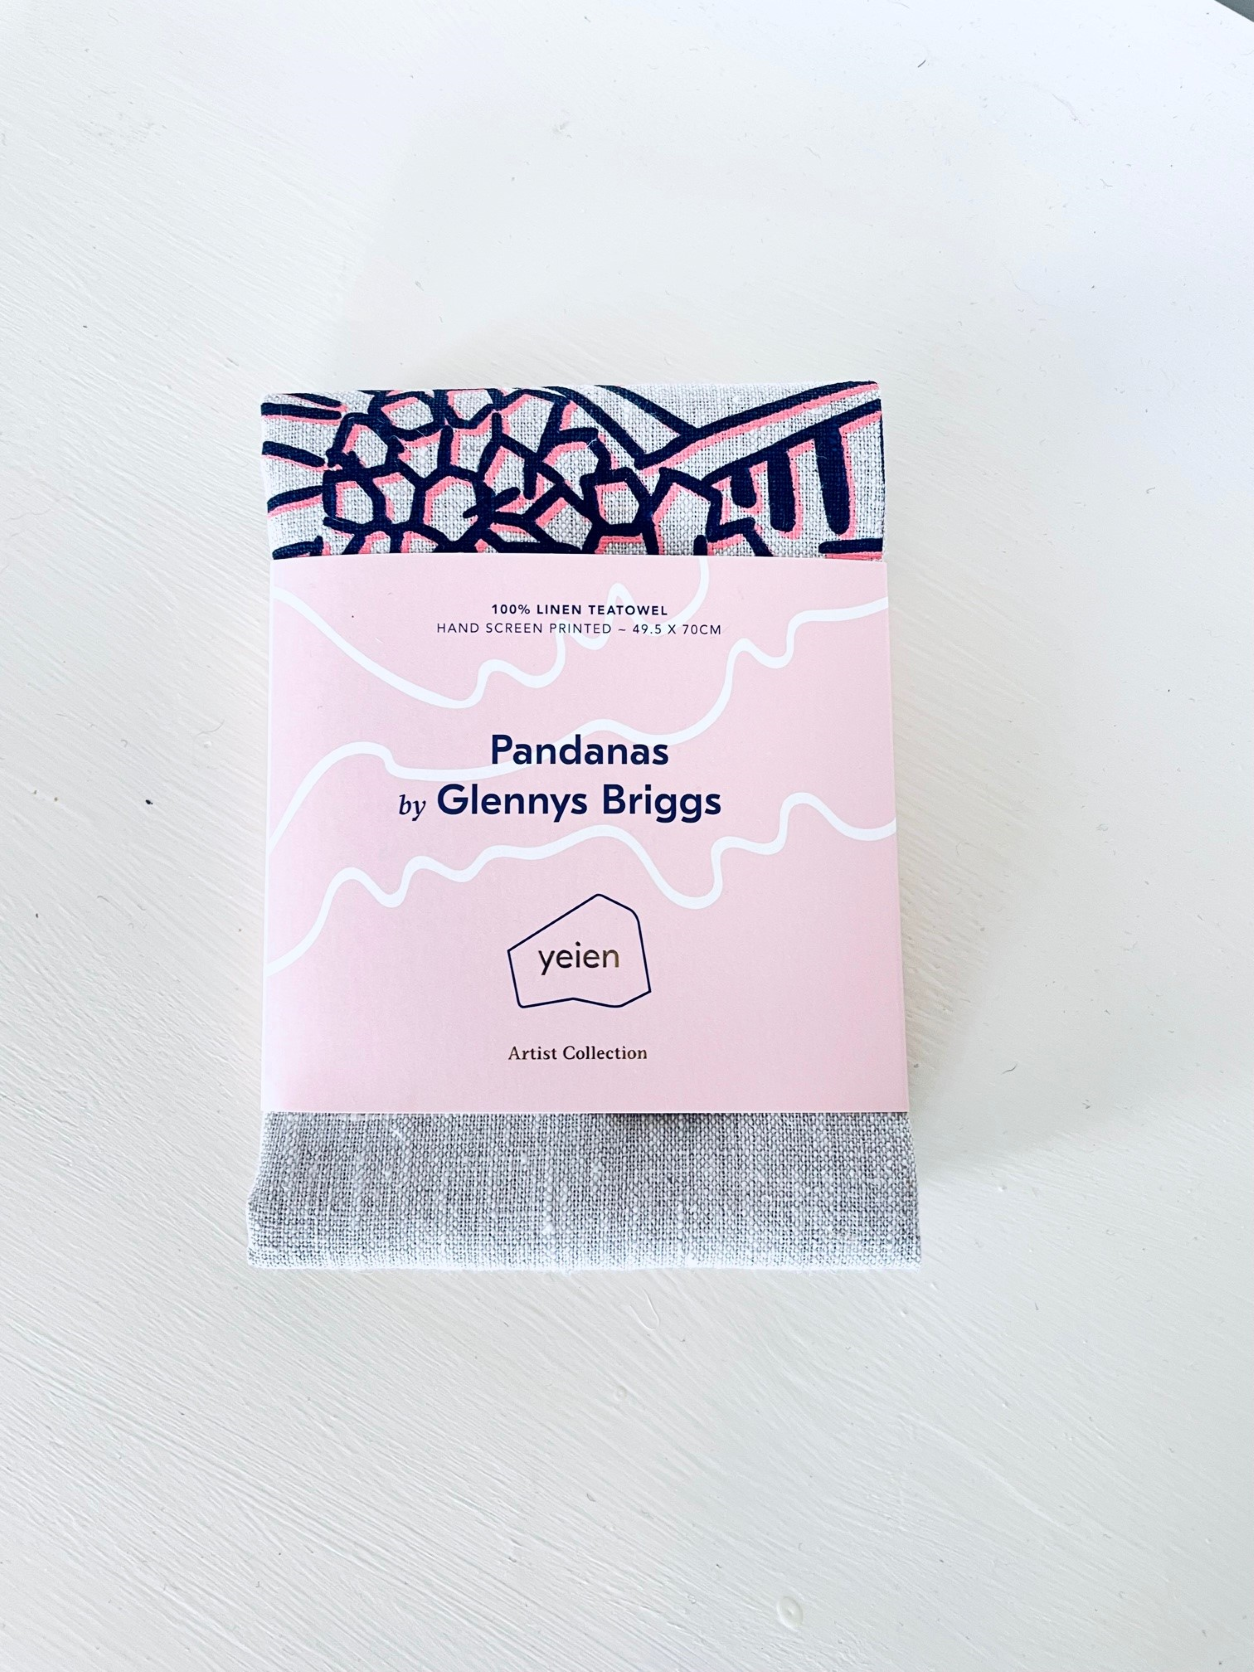 Linen Tea Towel - Pandanas by Glennys Briggs